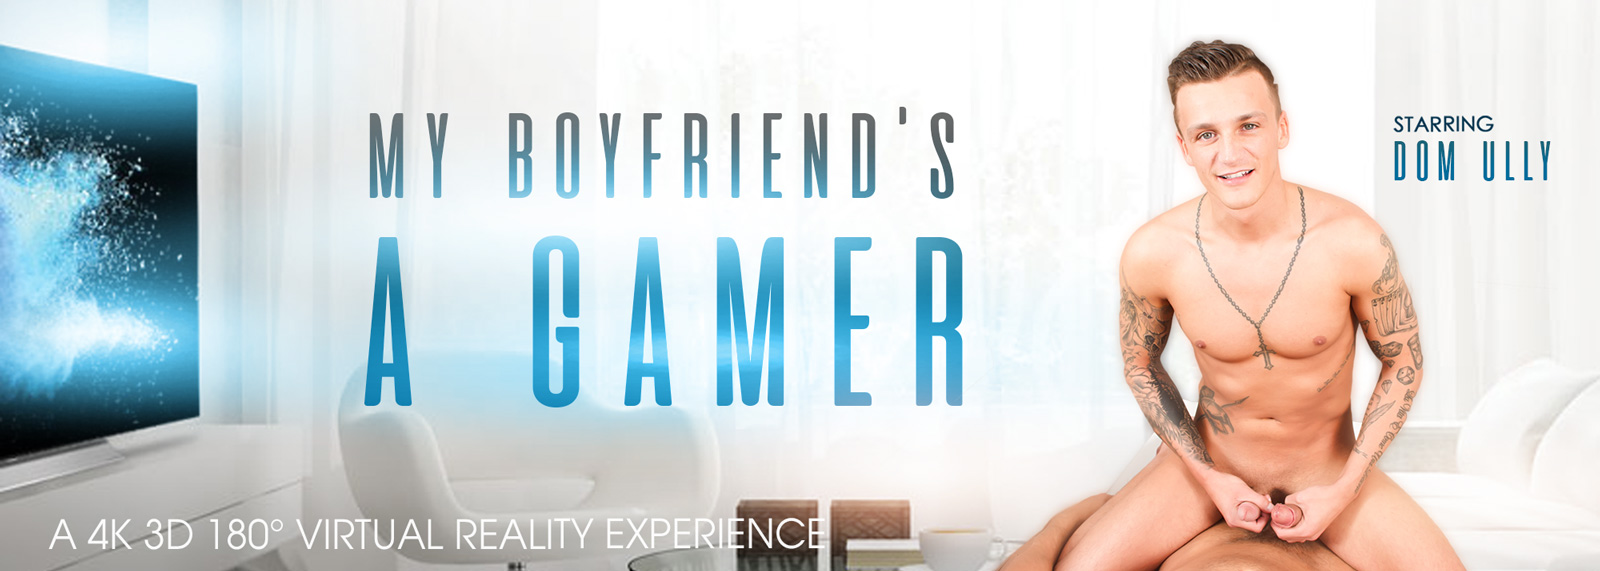 My Boyfriend's a Gamer - VR Porn Video, Starring Dom Ully VR